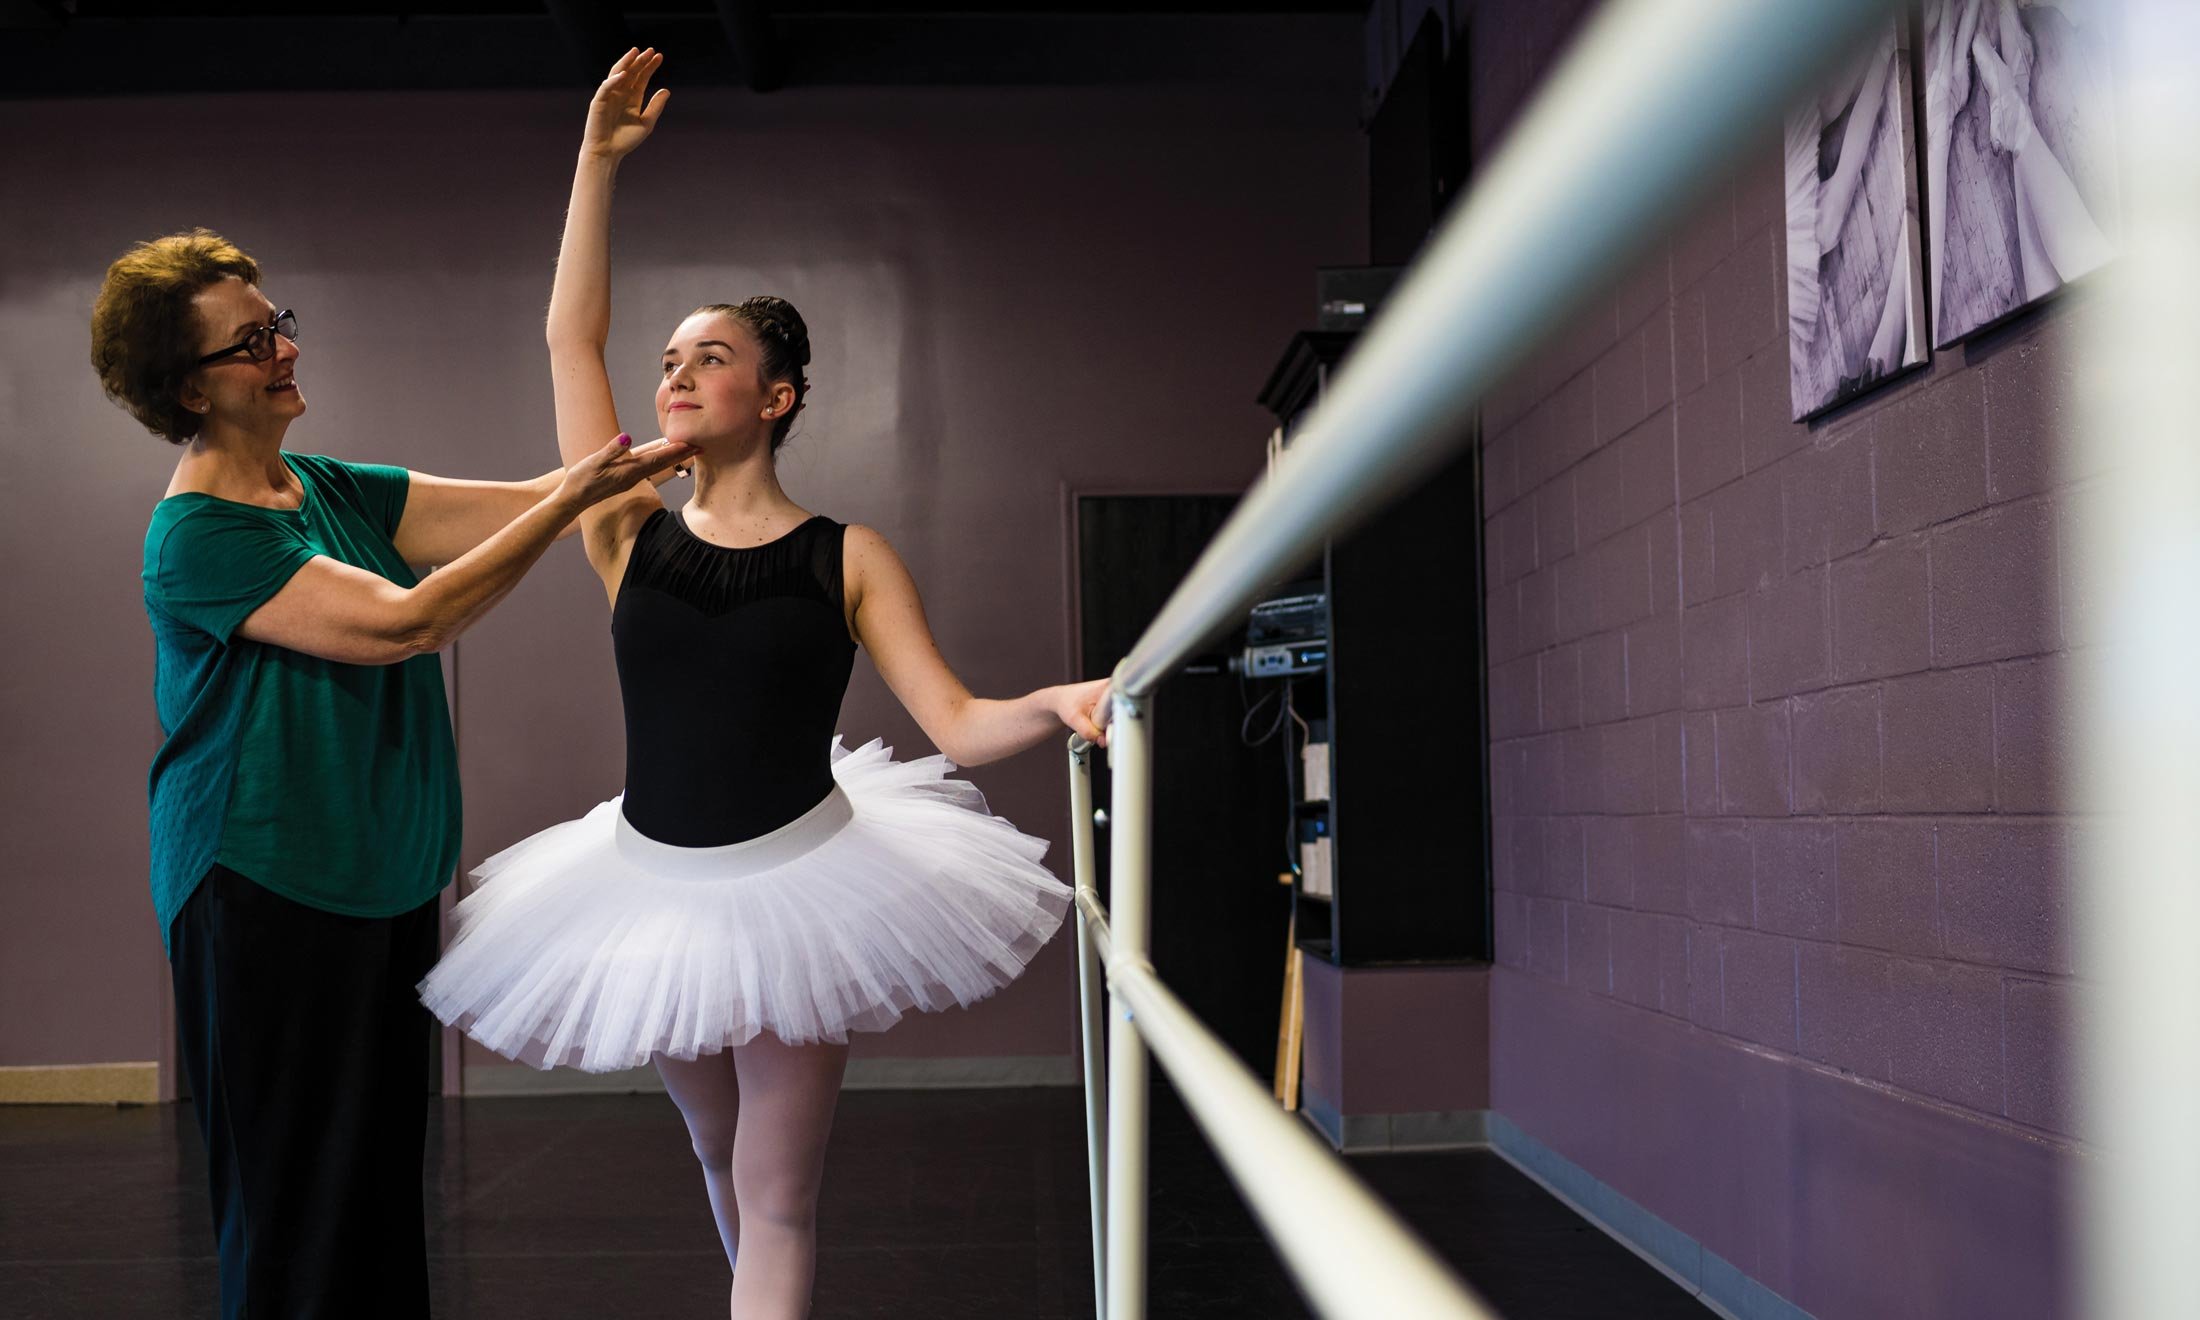 Oakland University alumna Mary Sherman corrects a ballet student's form in the Macomb Ballet Company studio.